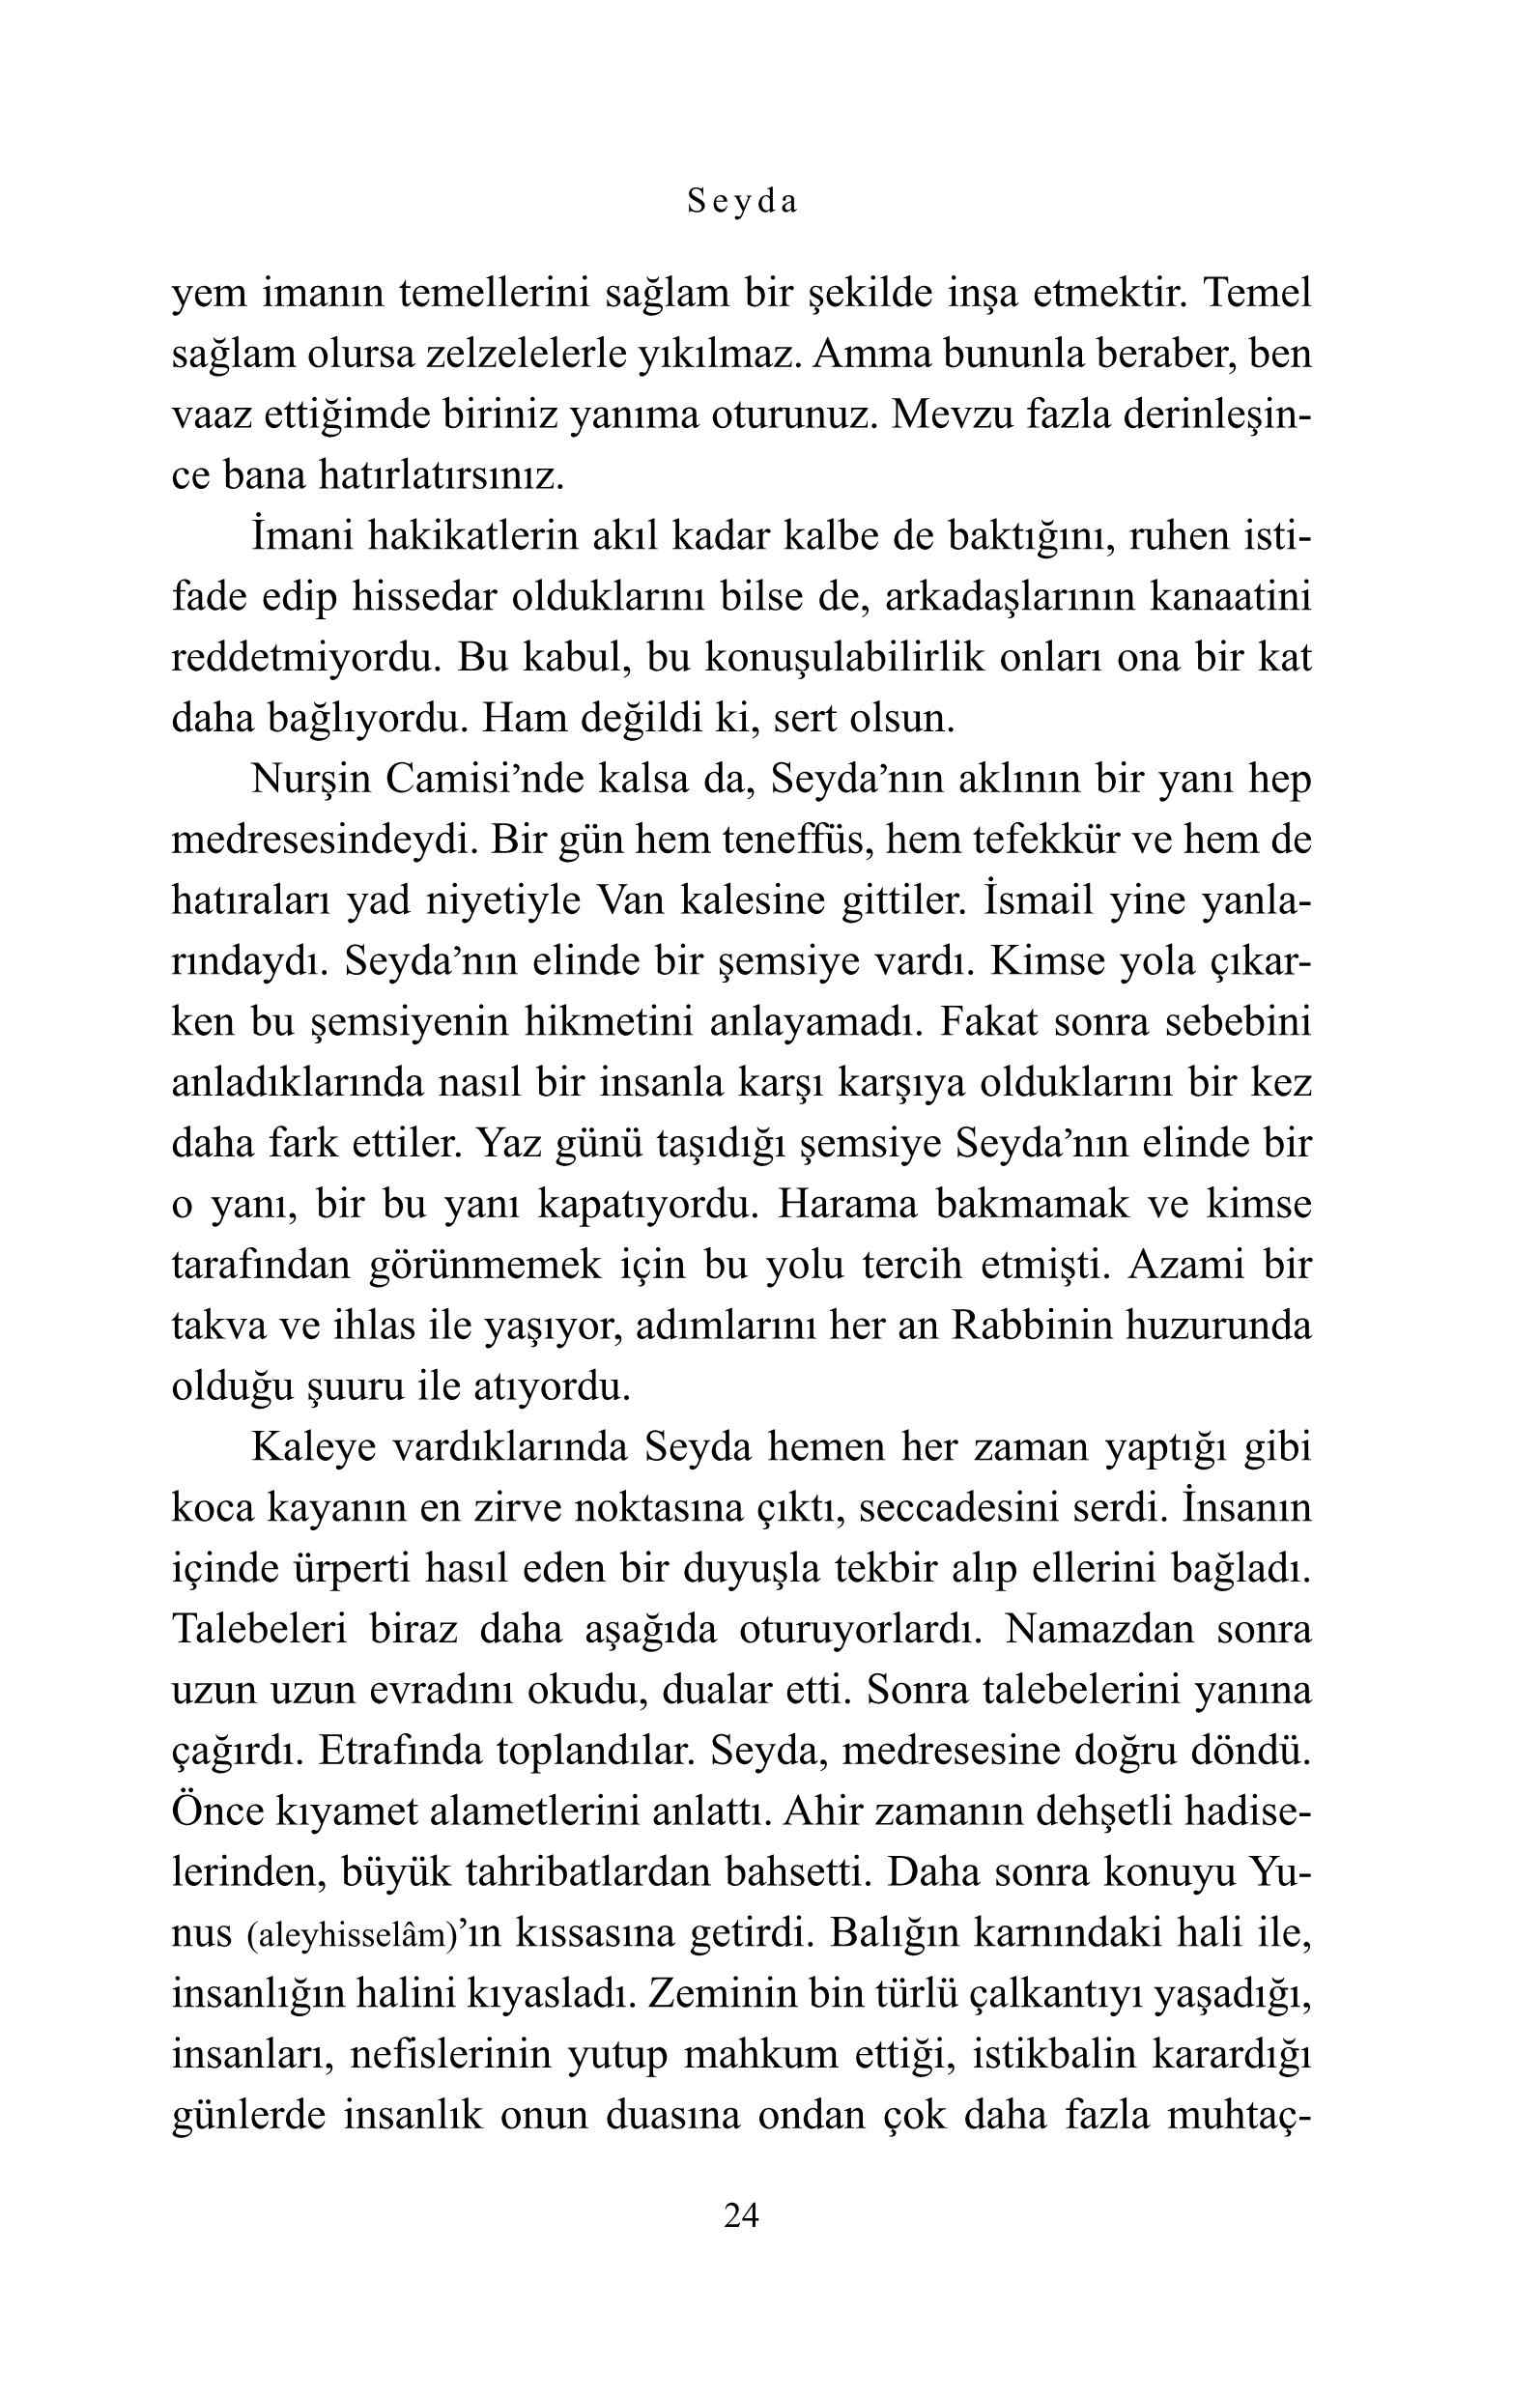 Mehmet Akar - Seyda - SahdamarY.pdf, 249-Sayfa 